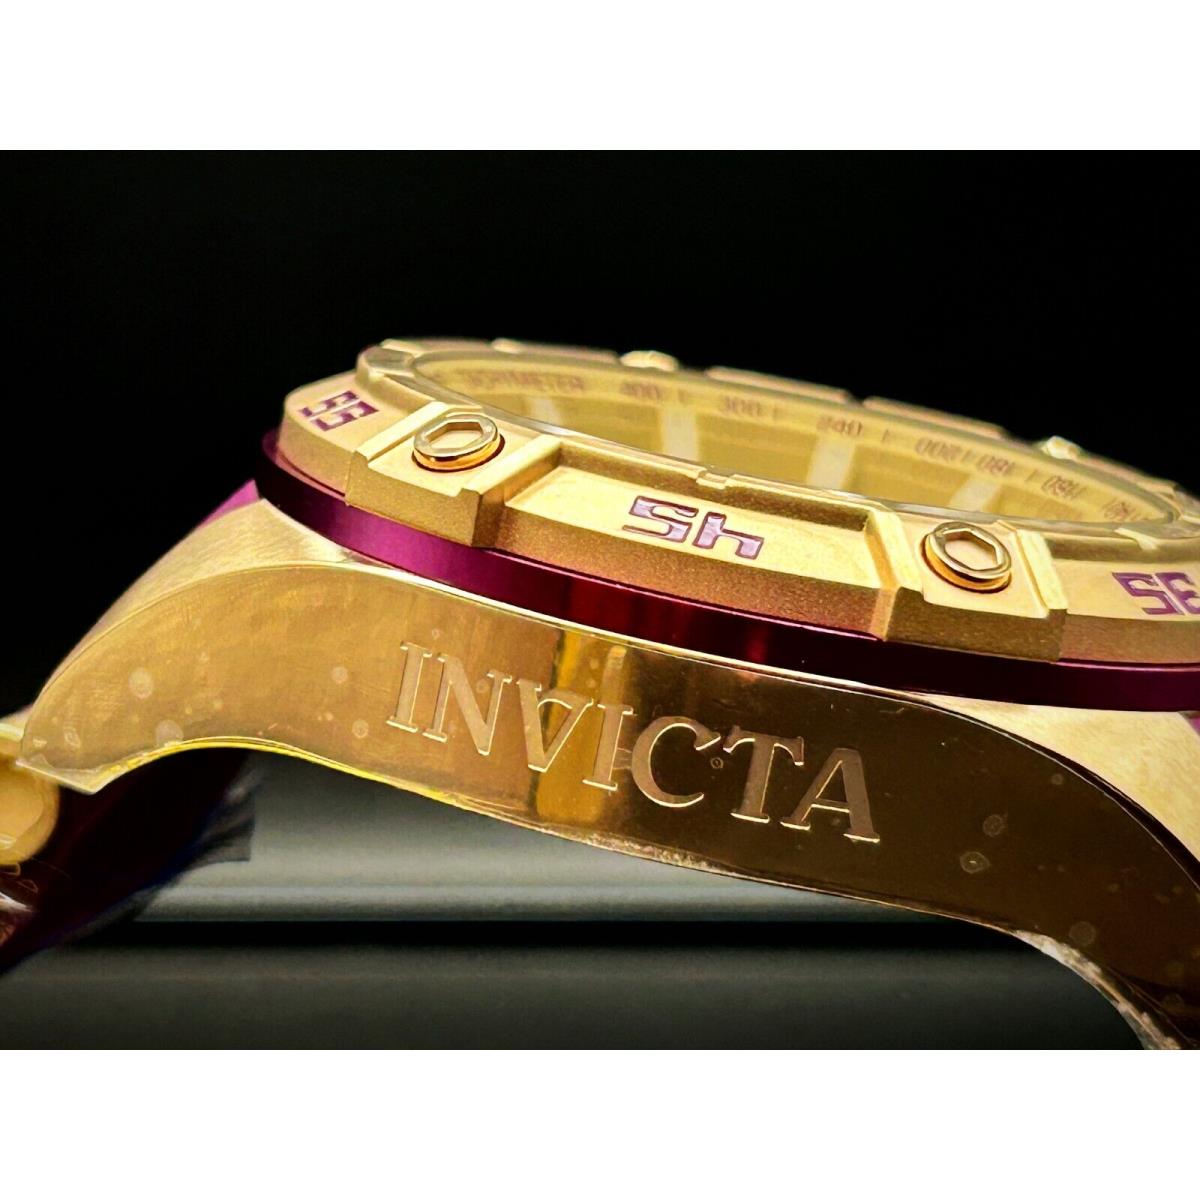 Invicta watch Speedway - Dial: Purple, Band: Purple, Bezel: Rose Gold